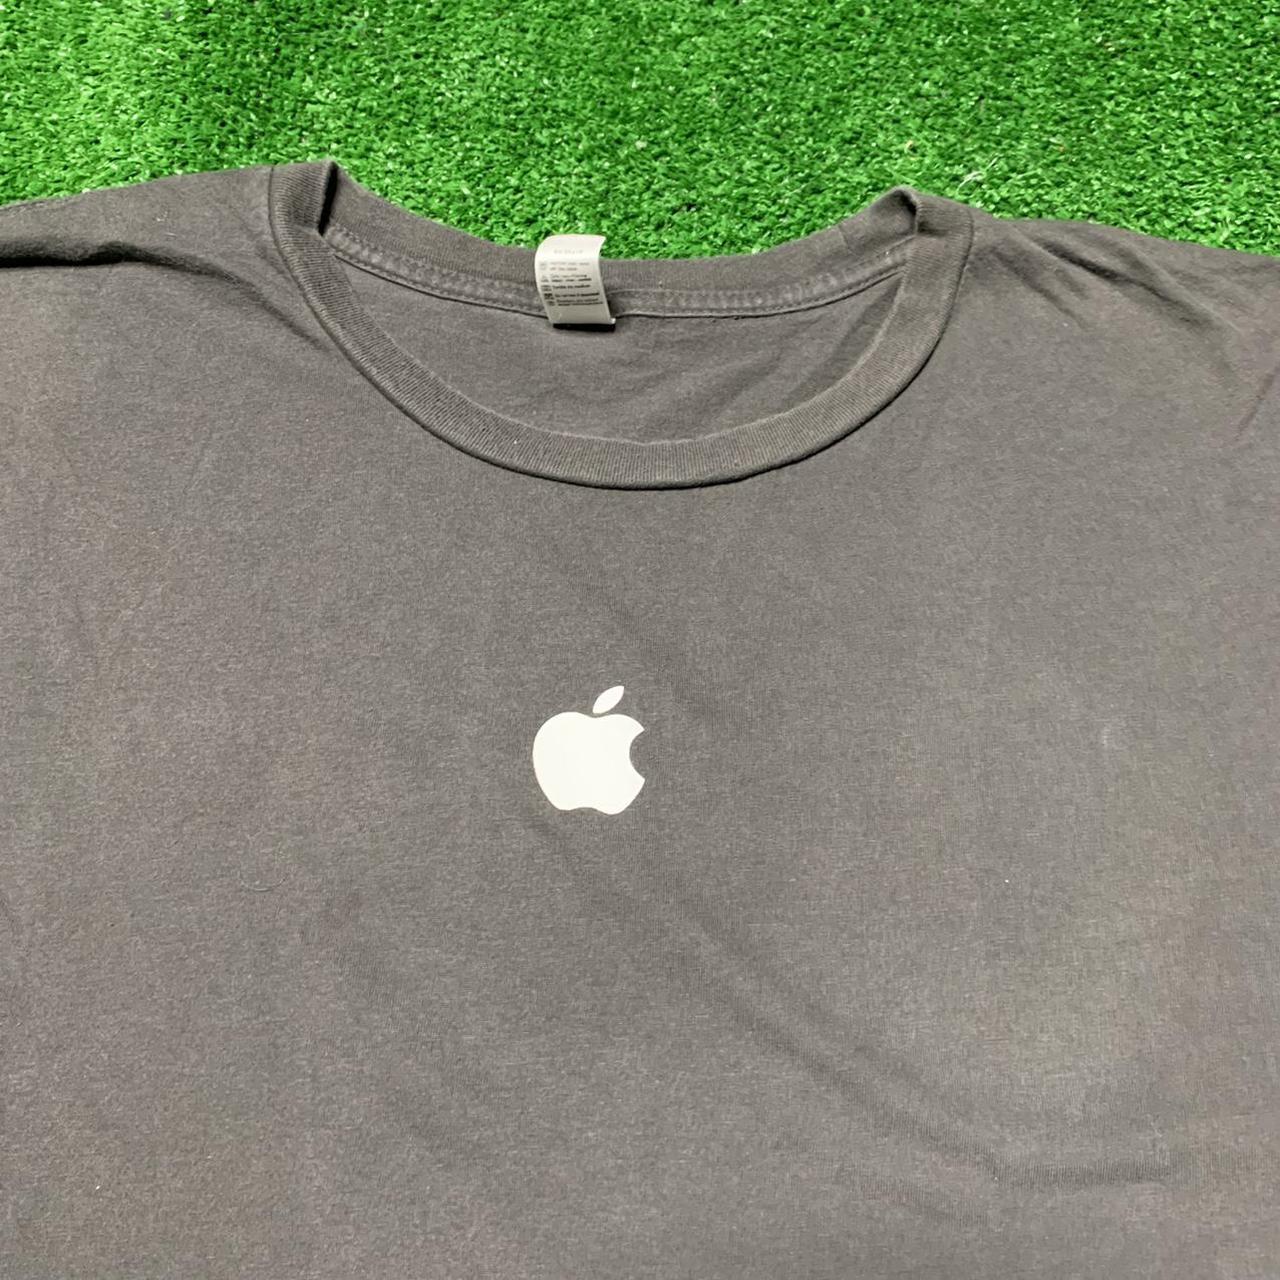 Product Image 2 - Apple Center Logo Grey T-Shirt